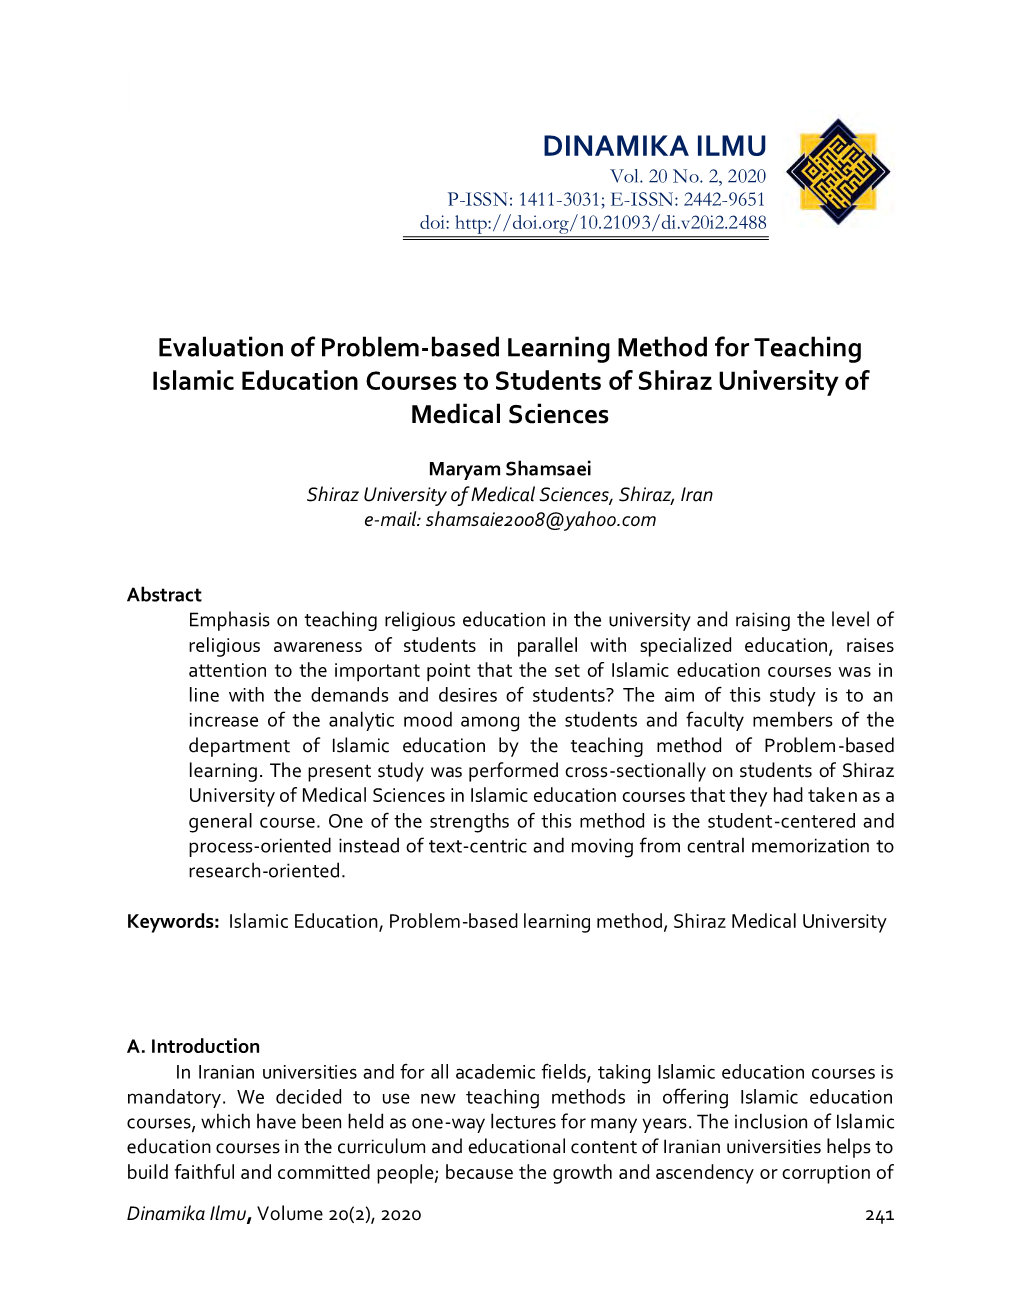 Evaluation of Problem-Based Learning Method for Teaching Islamic Education Courses DINAMIKA ILMU Vol